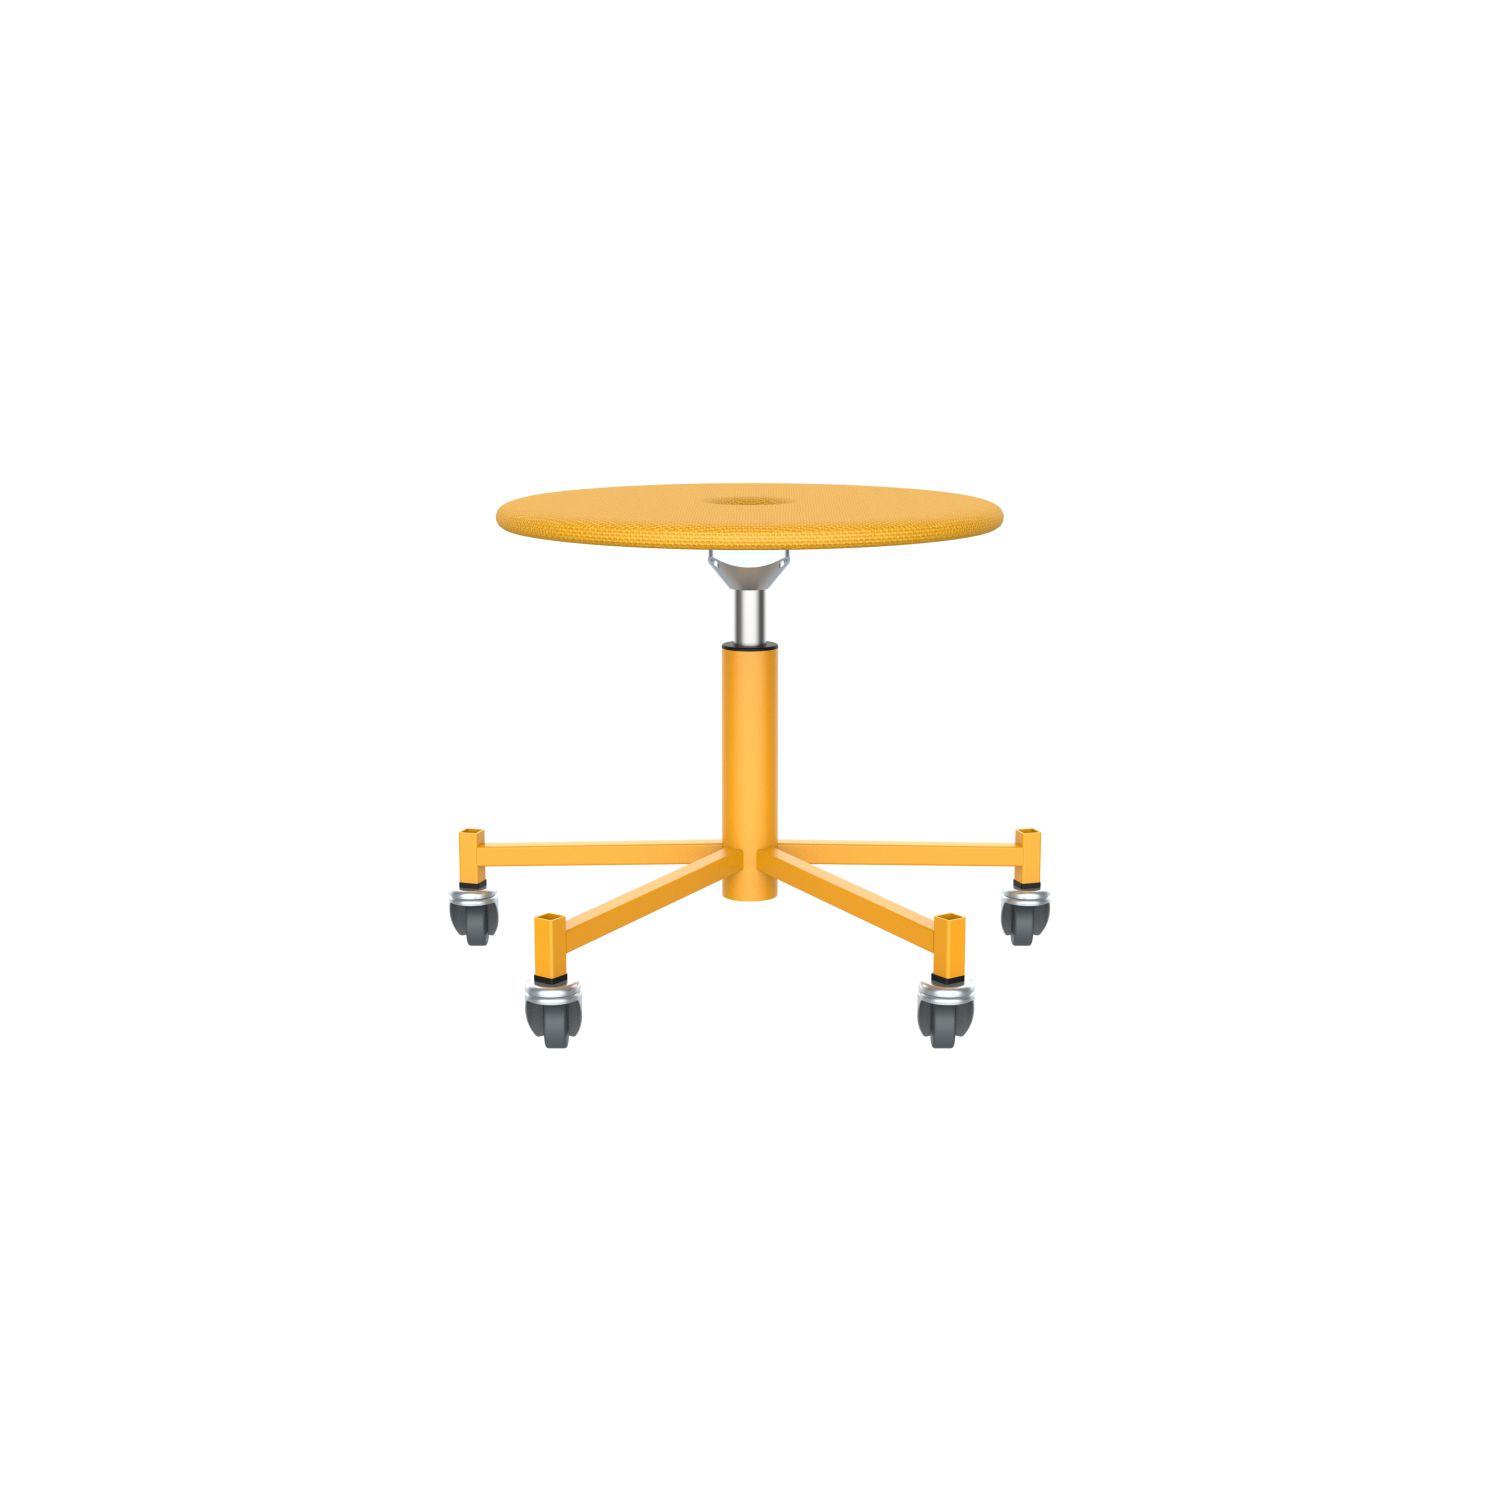 lensvelt piet hein eek mitw upholstered stool with wheels lemon yellow 051 signal yellow ral1003 with wheels